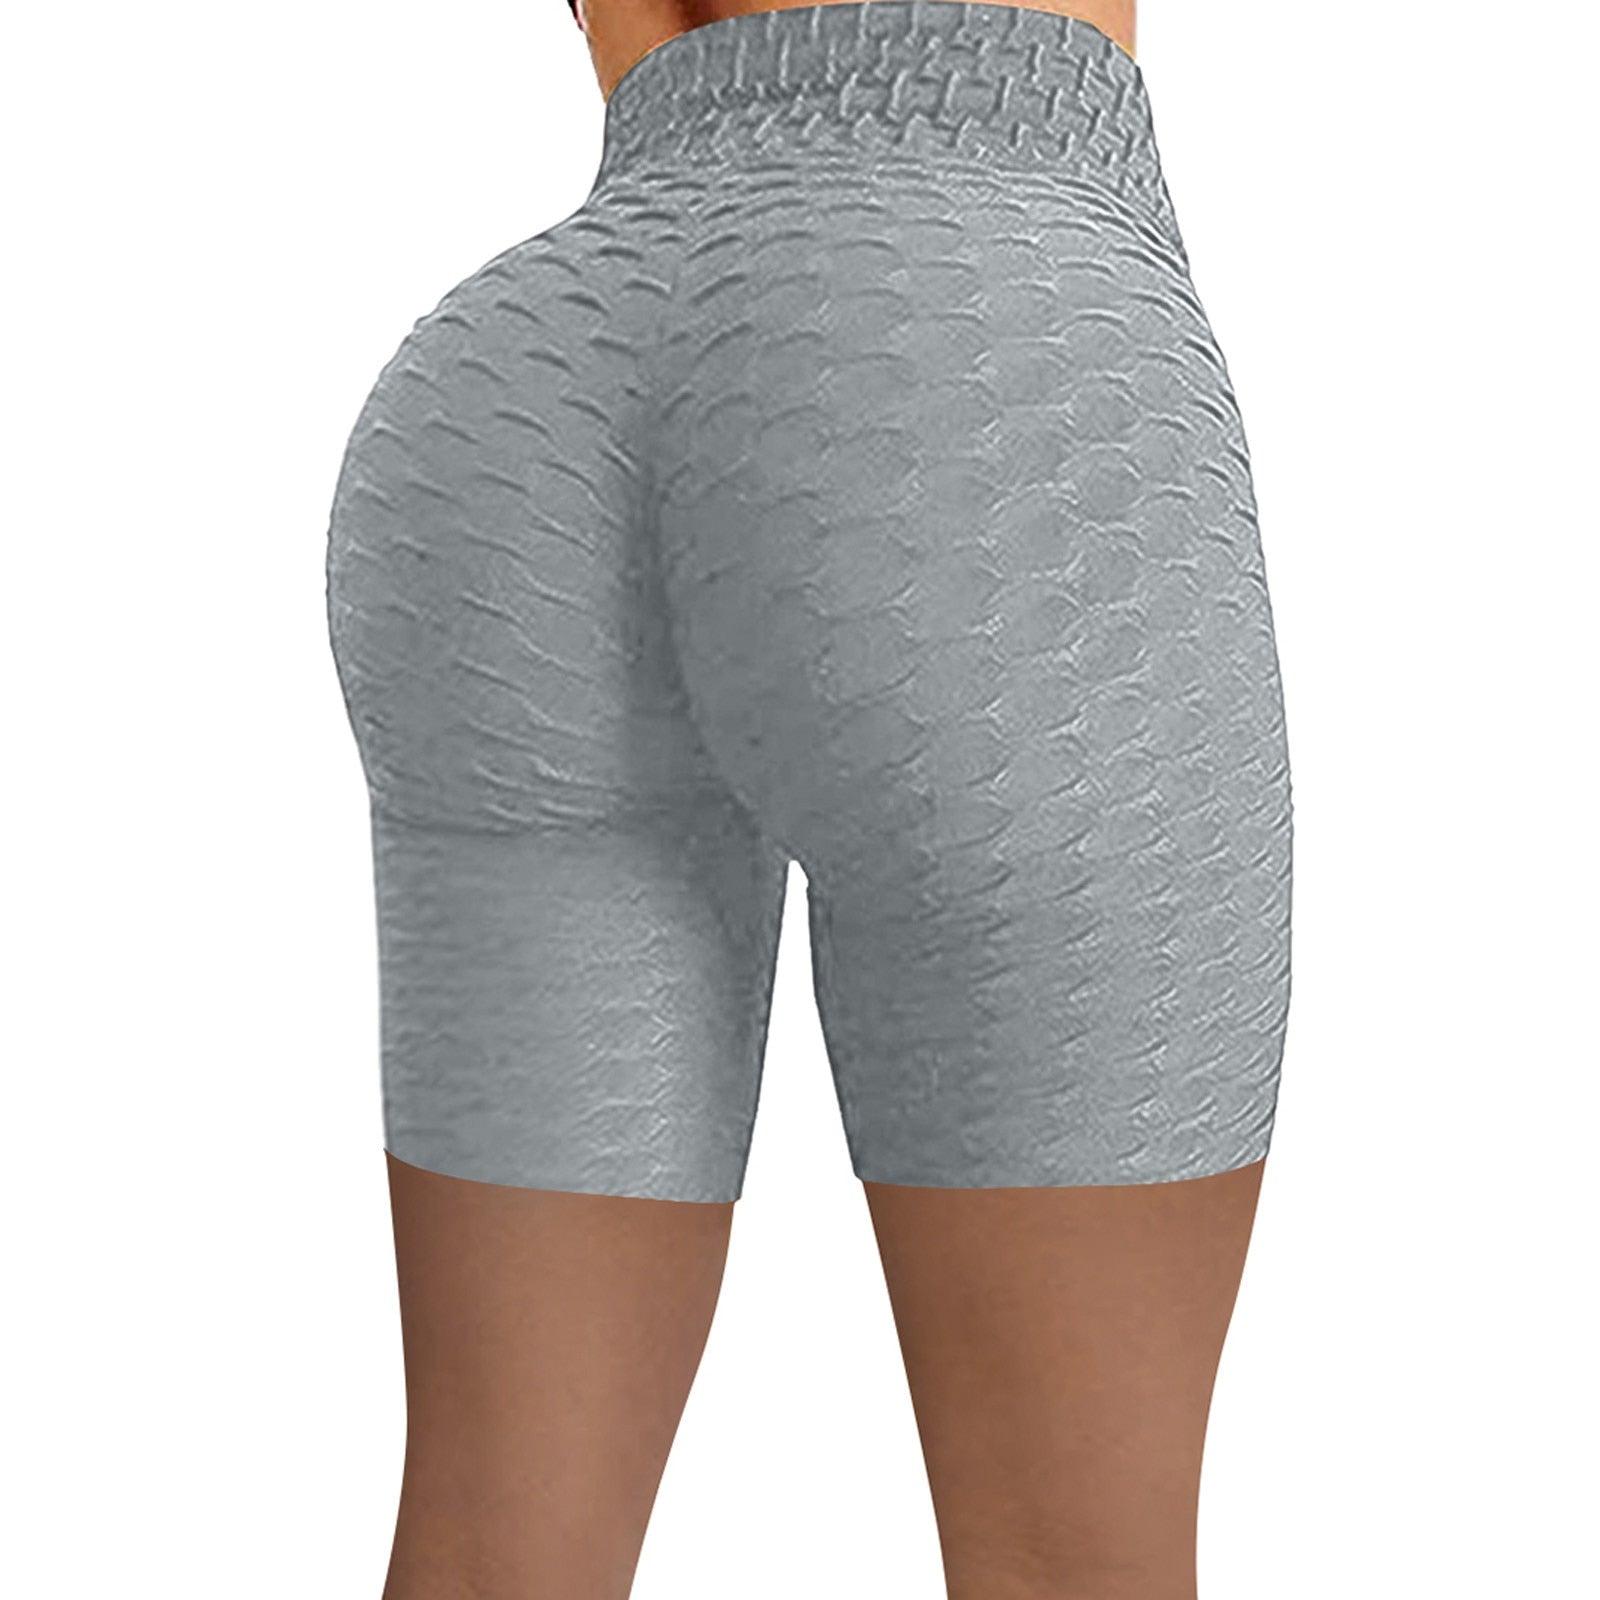 Summer Knit Shorts High Waist Hip Tight Leggings Stretch Running Biker Shorts - Etyn Online {{ product_tag }}